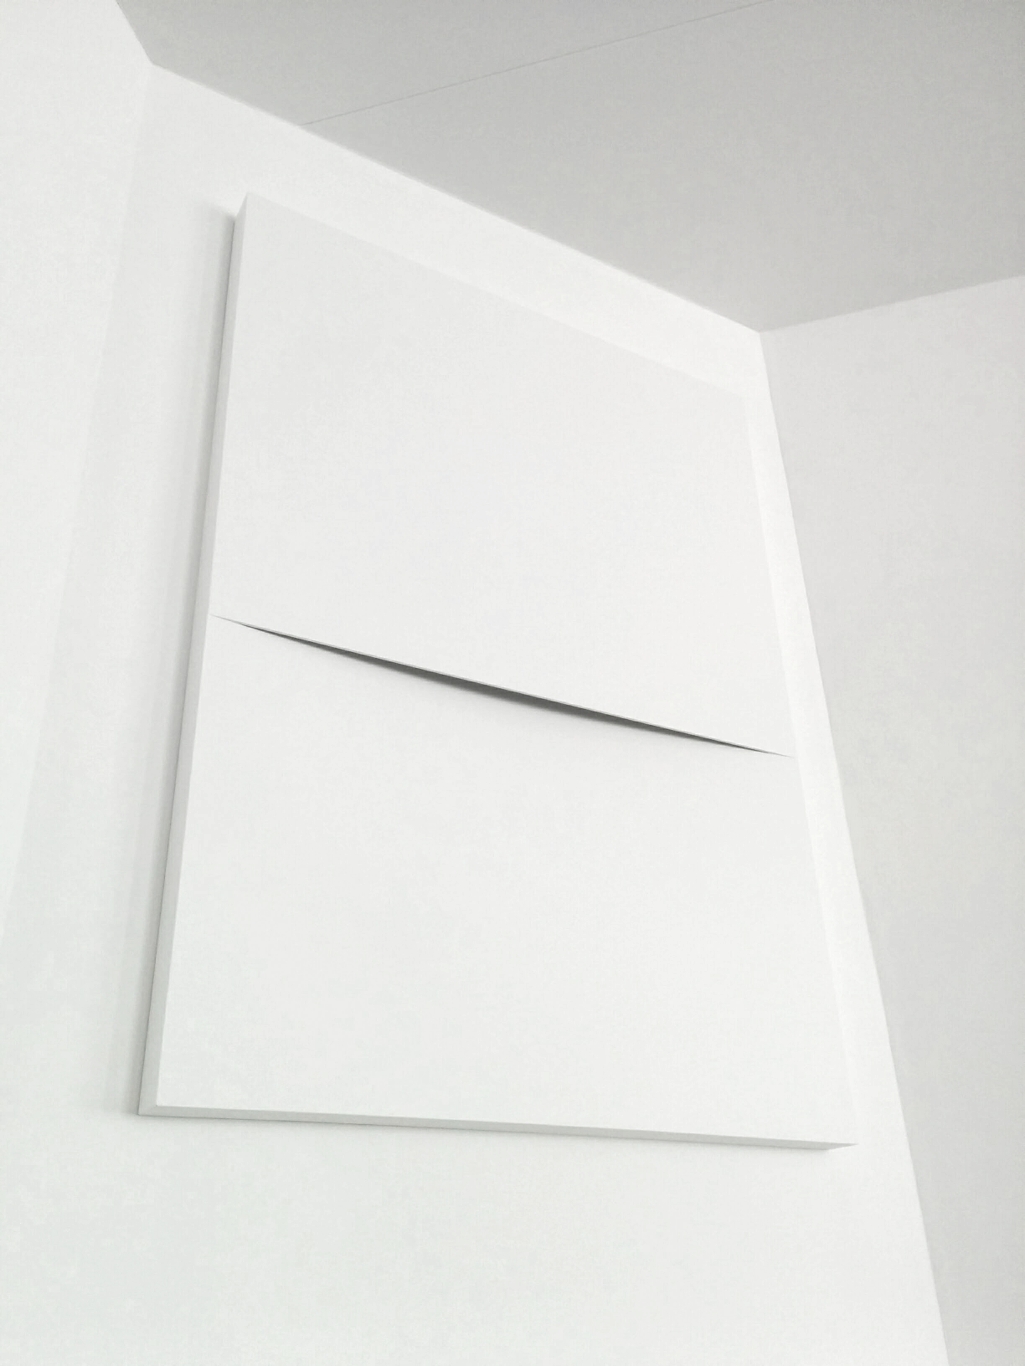 Sander Martijn Jonker, 2017, abstract reliëf, R172, 77,5 x 106 cm